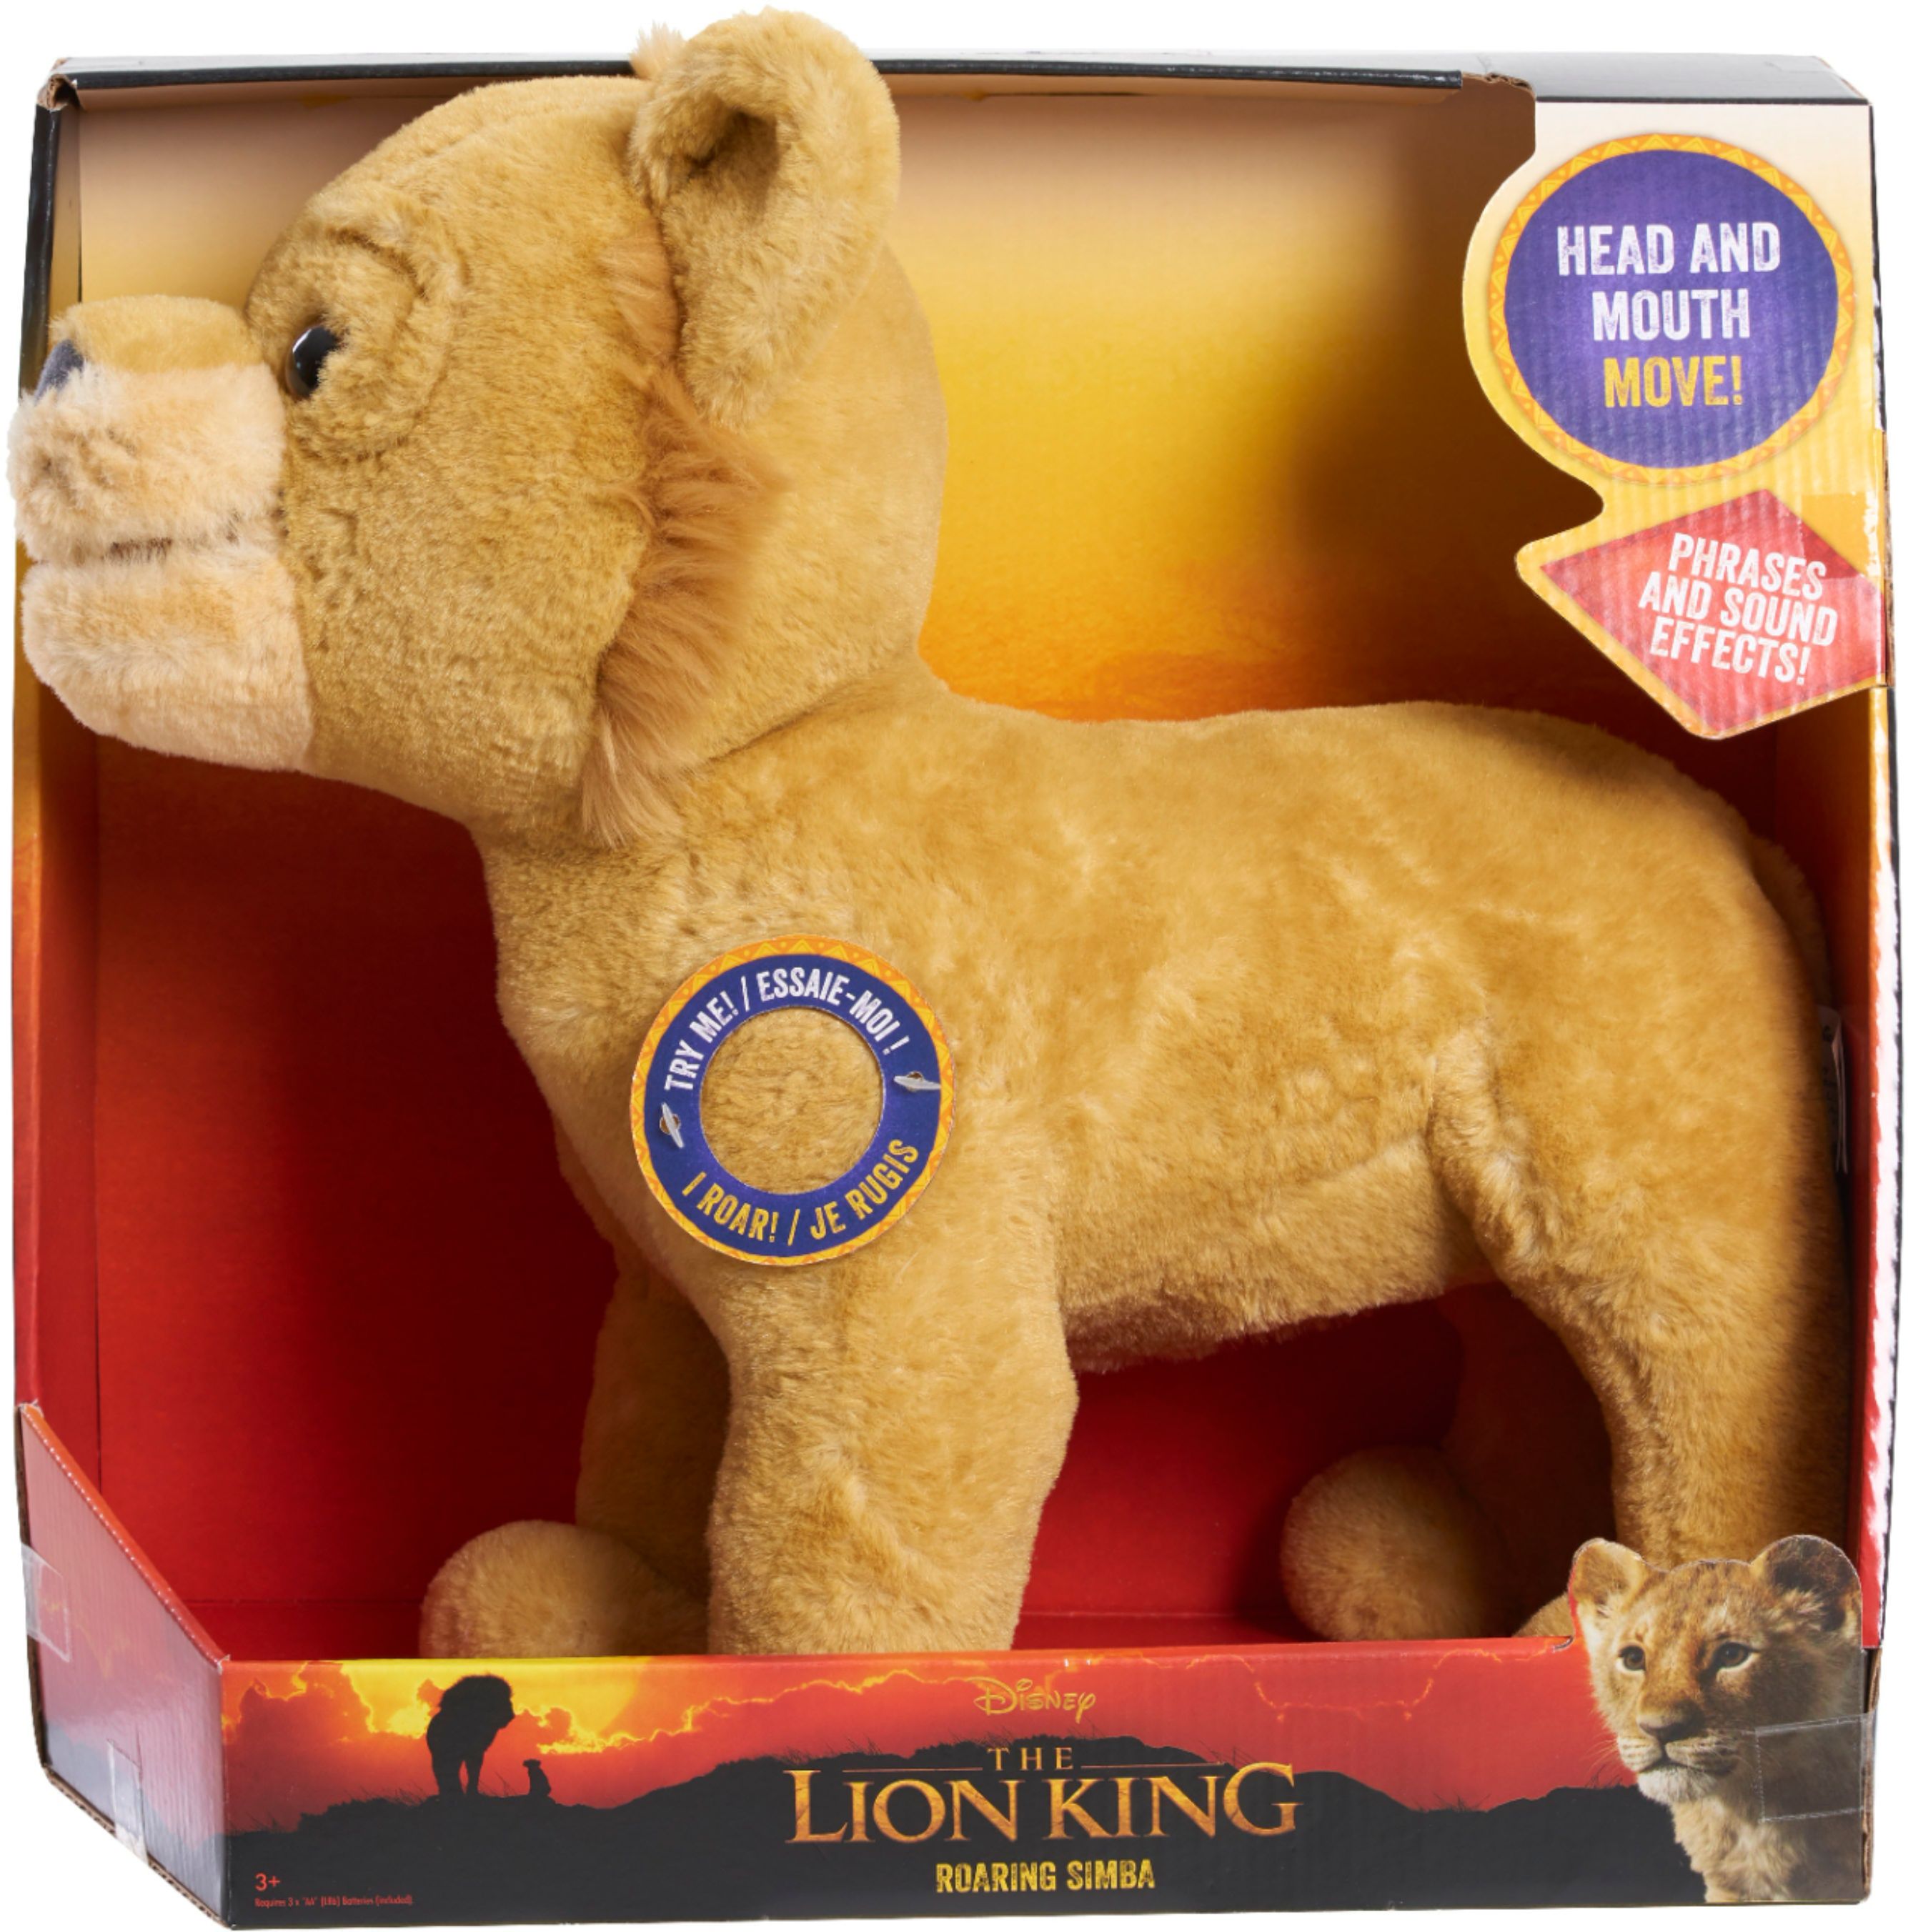 stuffed lion that roars